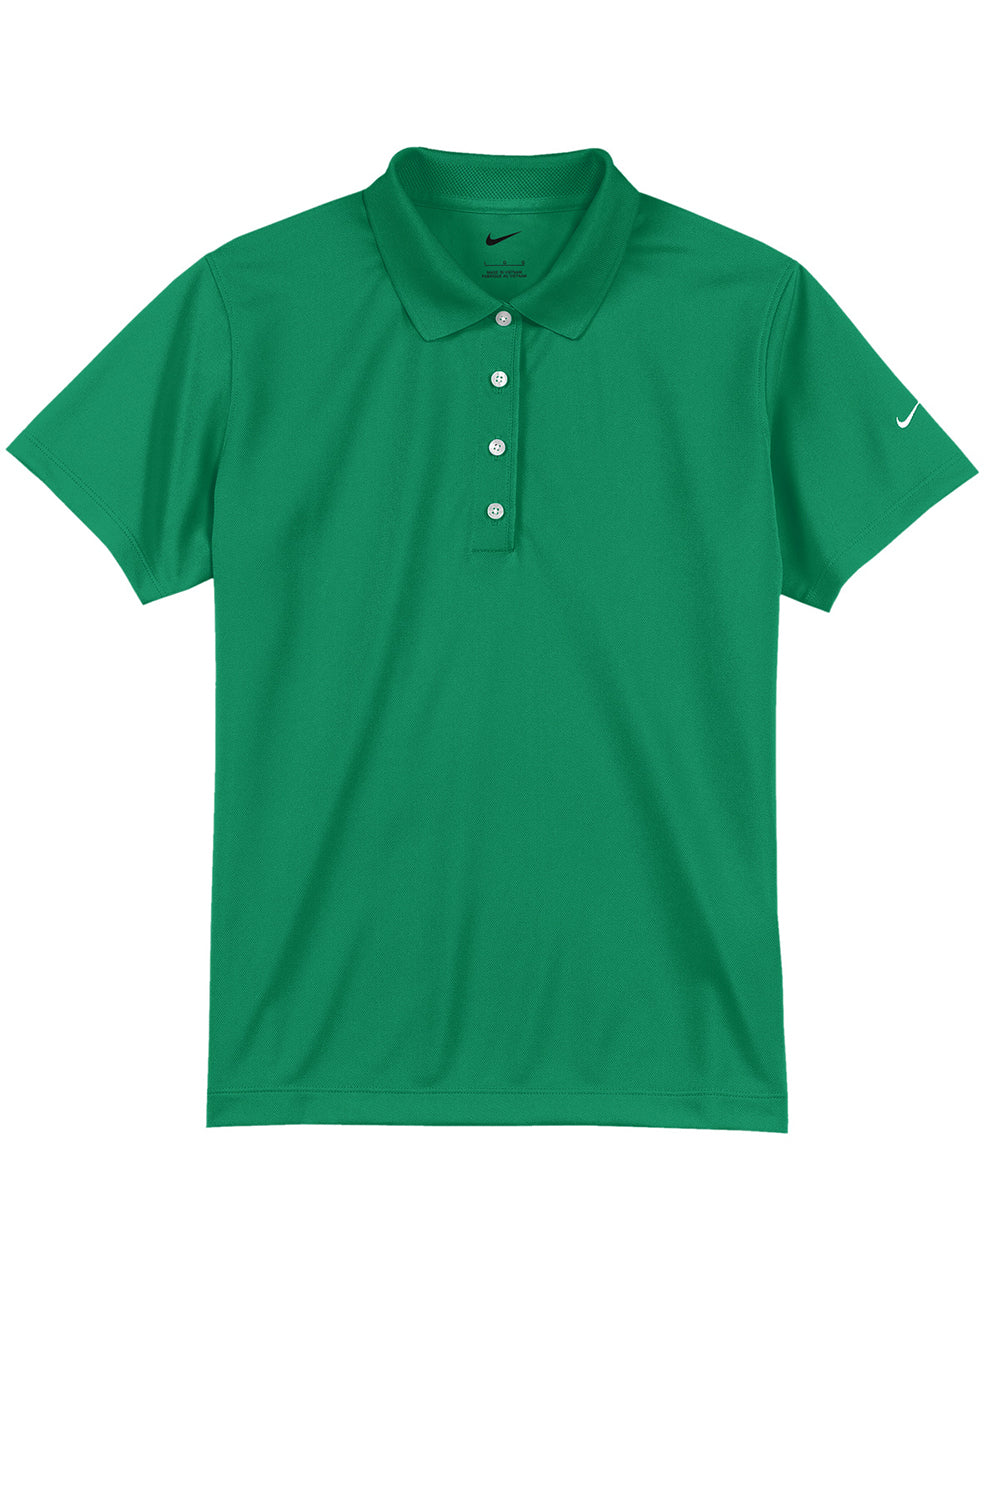 Nike 203697 Womens Tech Basic Dri-Fit Moisture Wicking Short Sleeve Polo Shirt Lucky Green Flat Front